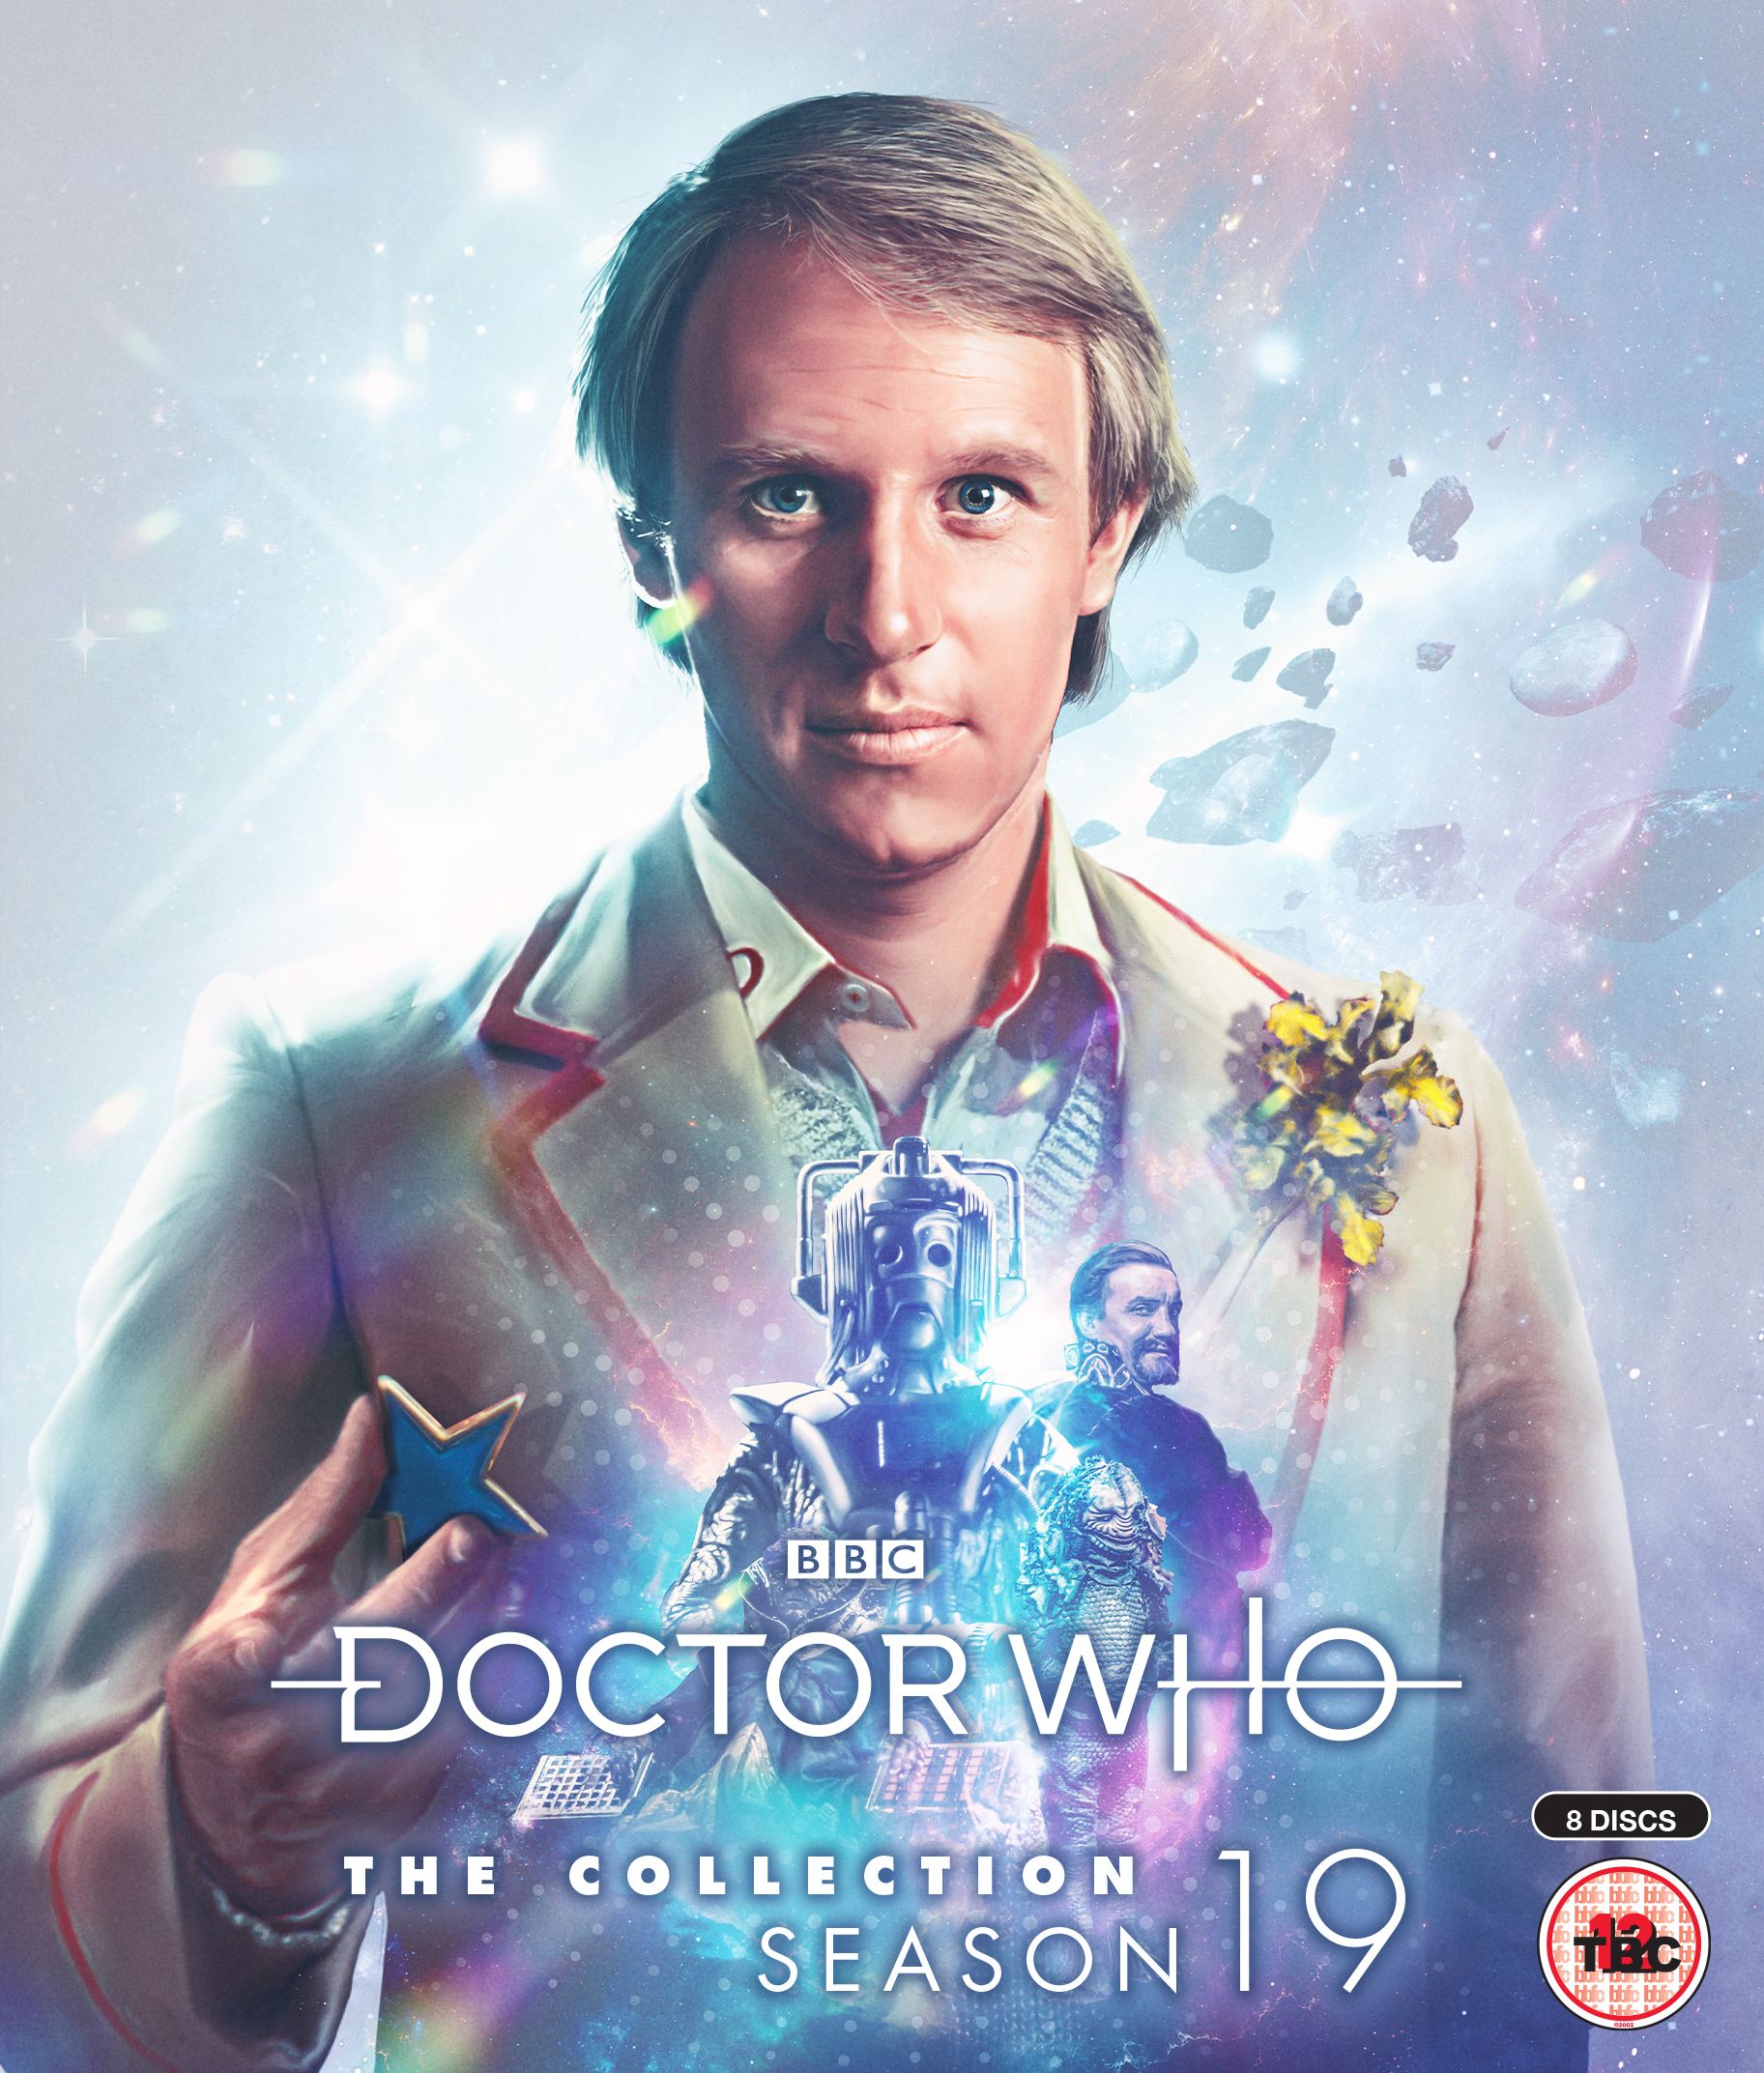 Doctor Who: Peter Davison Complete First Season (Blu-ray) – BBC